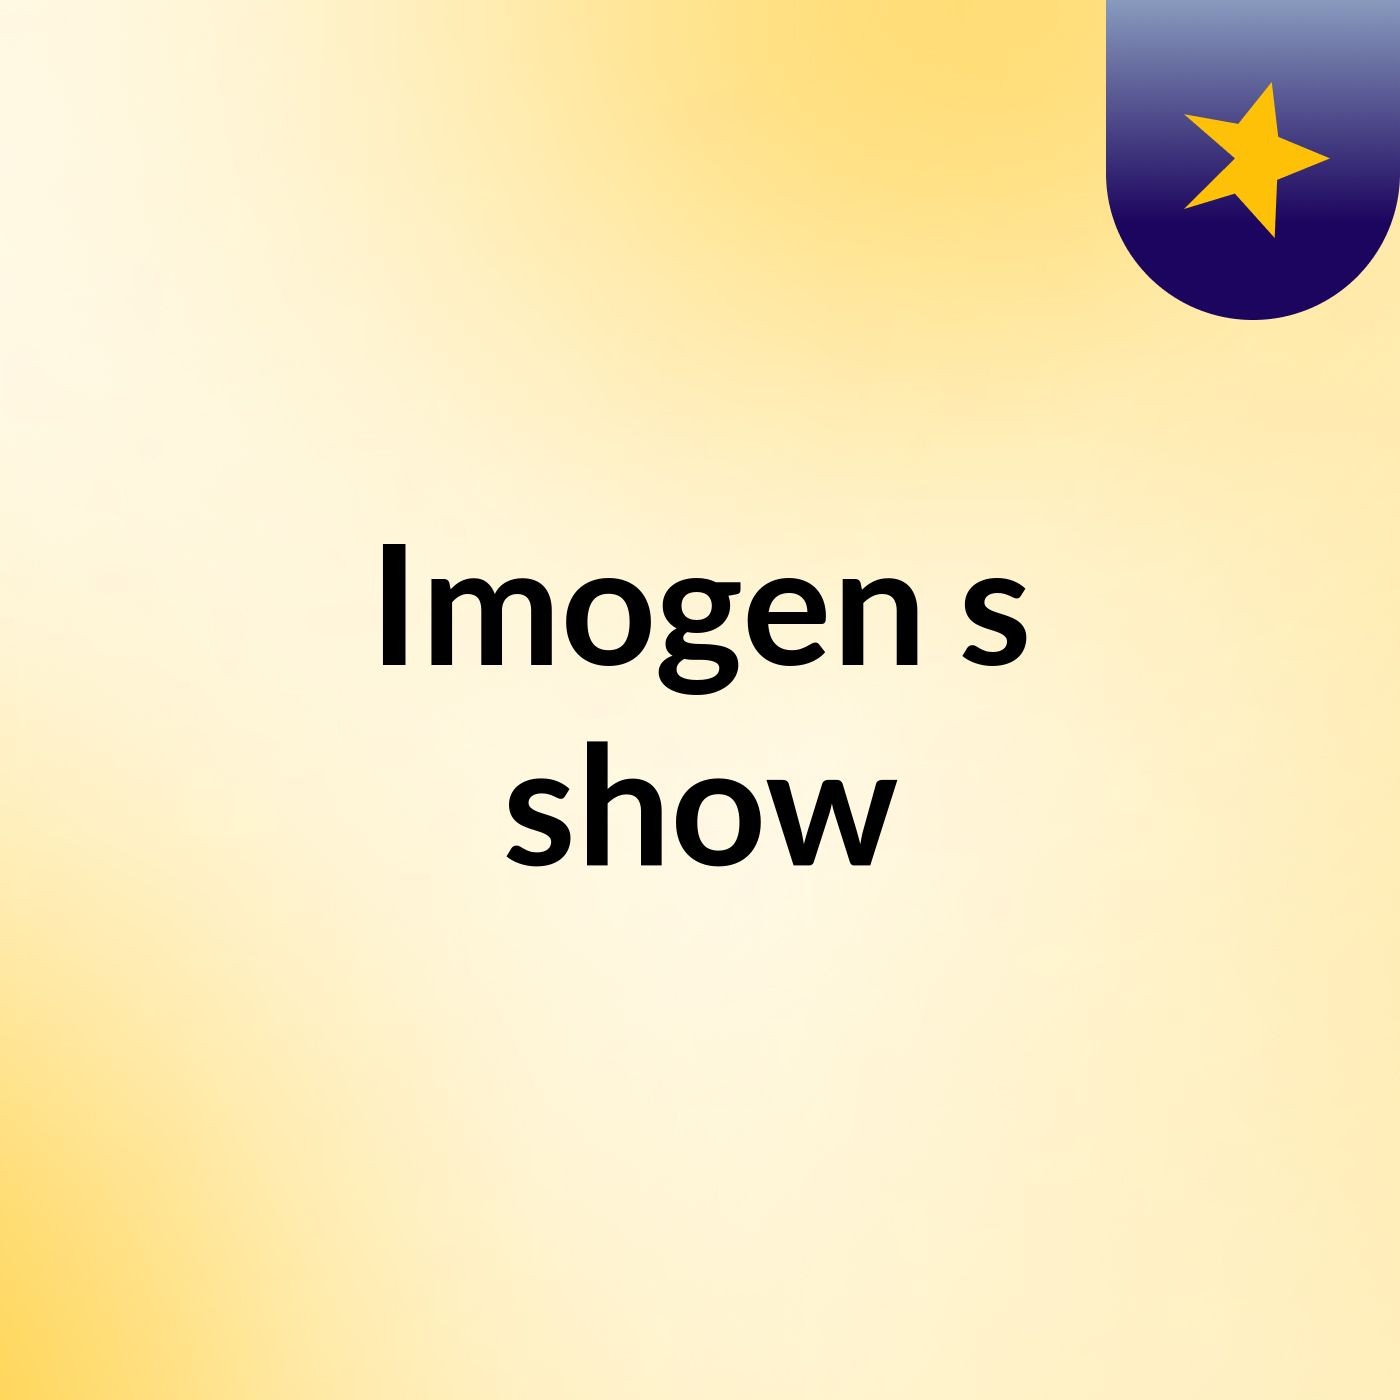 Imogen's show